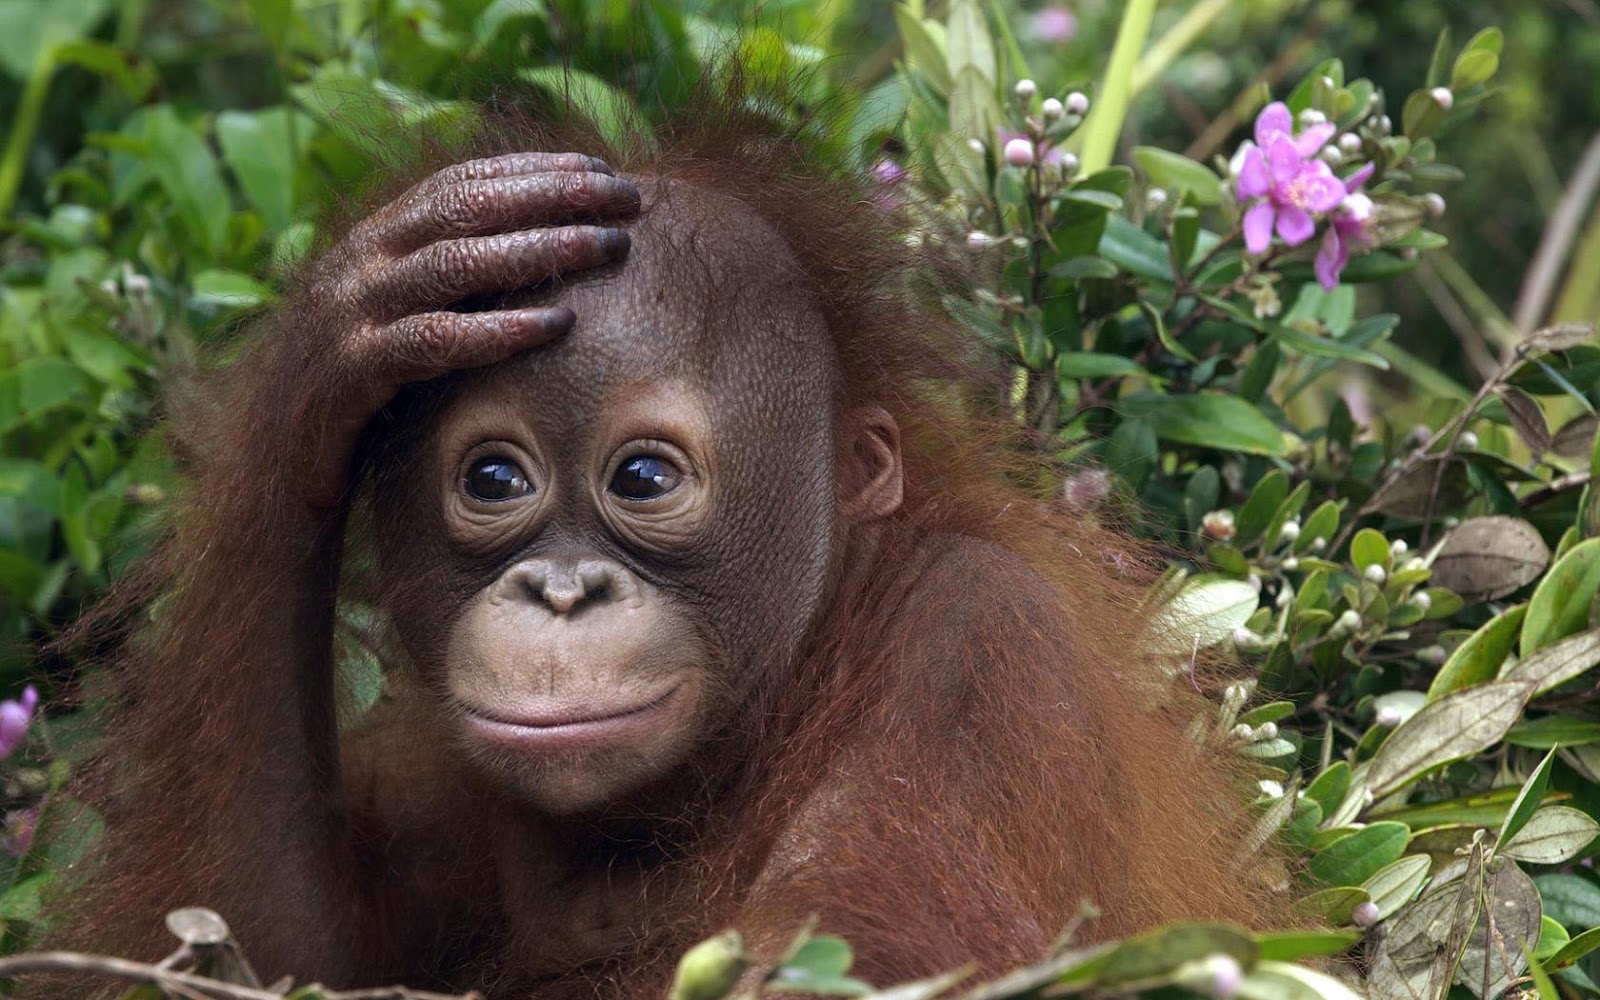 HD Animals Wallpaper Of A Cute Orangutan Baby Monkeys